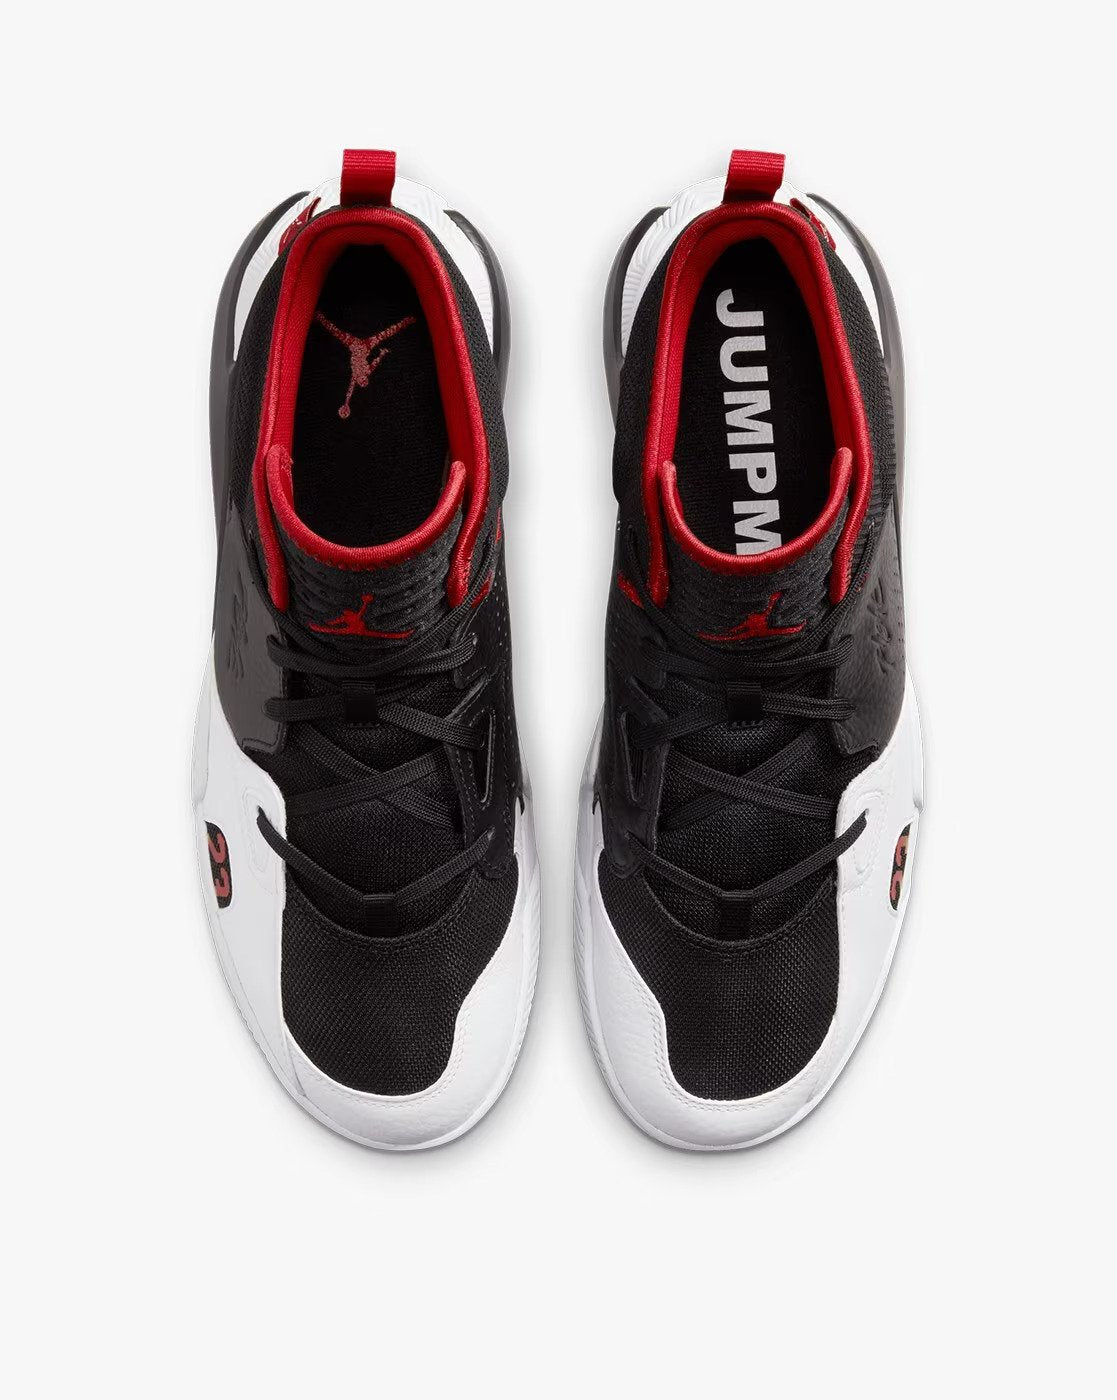 Jordan Stay Loyal 2 Basketball Shoes-dq8401 061